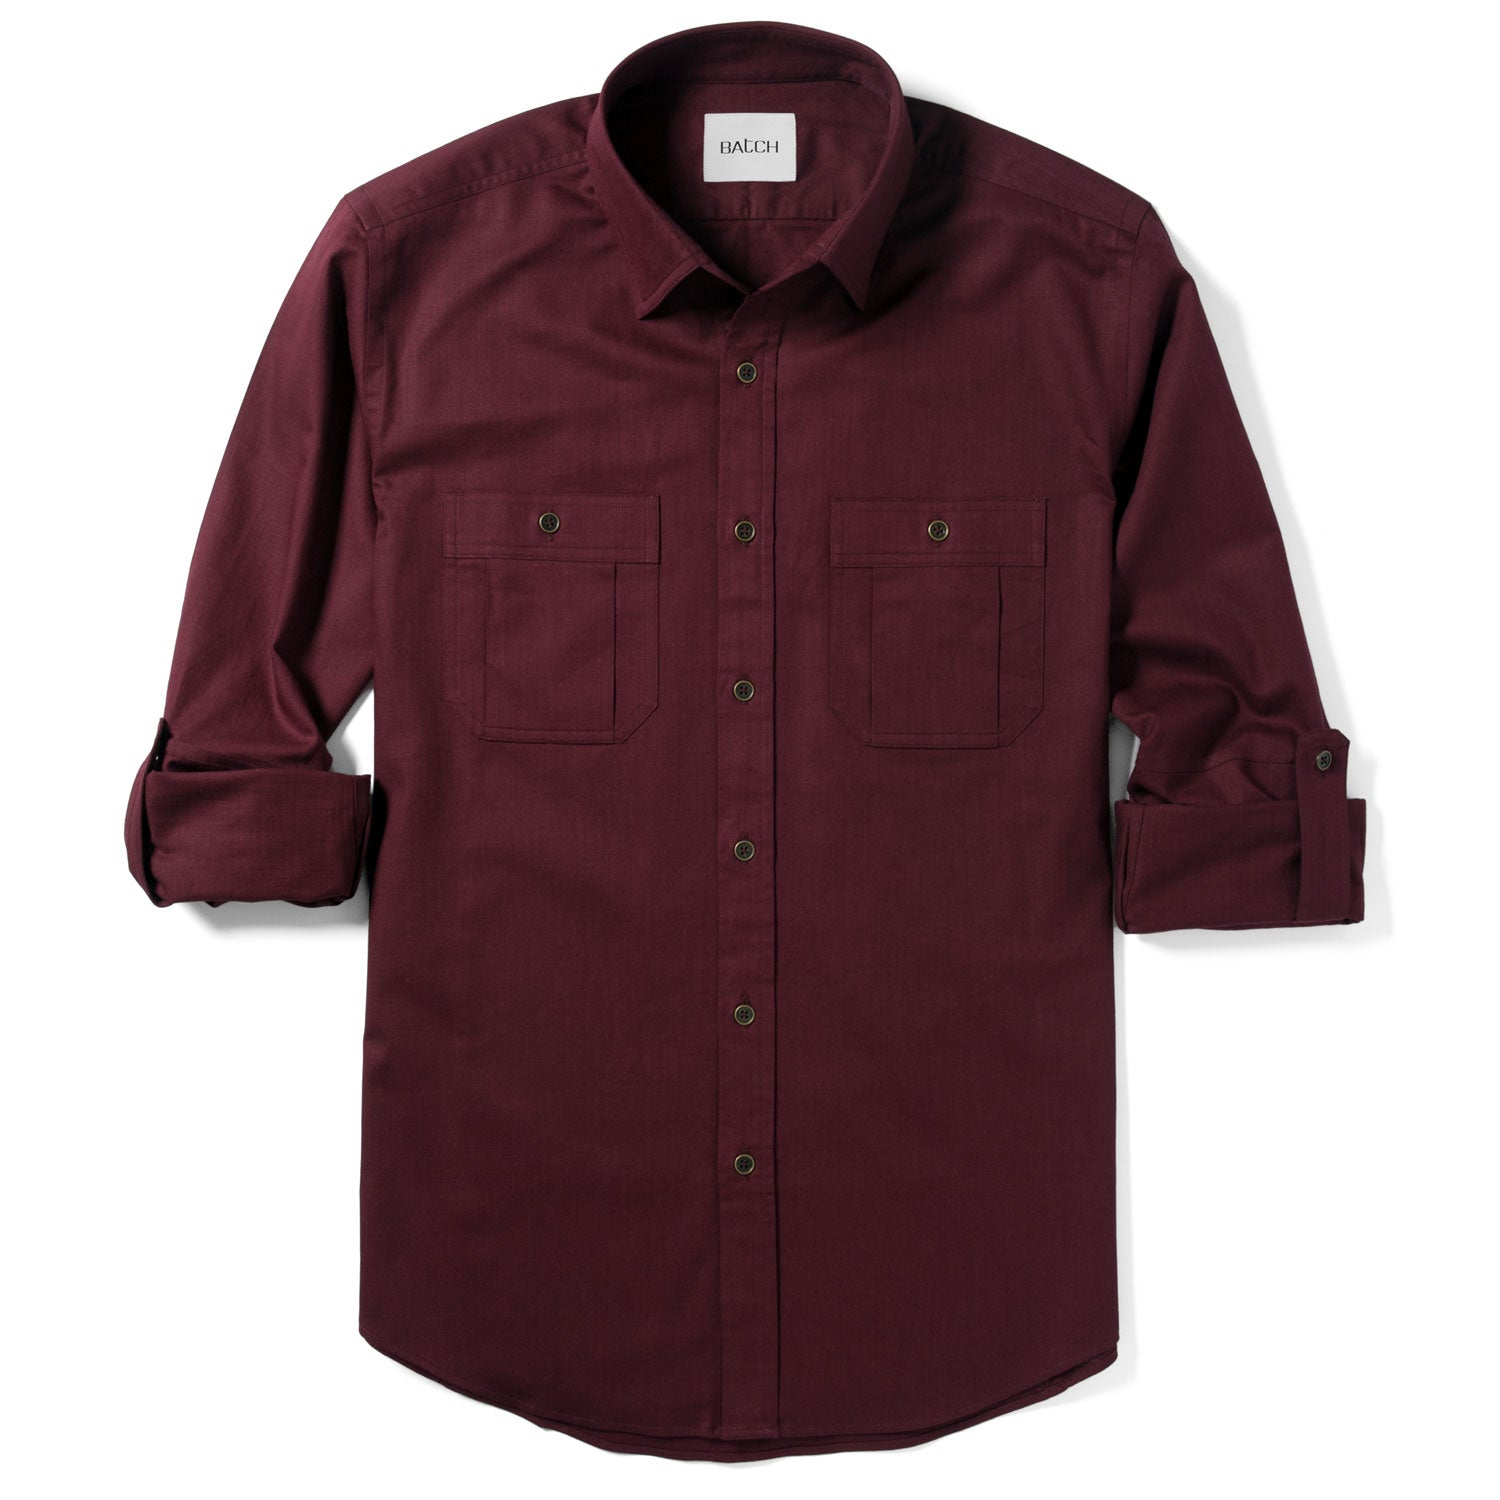 Fixer Utility Shirt – Dark Burgundy Cotton Twill